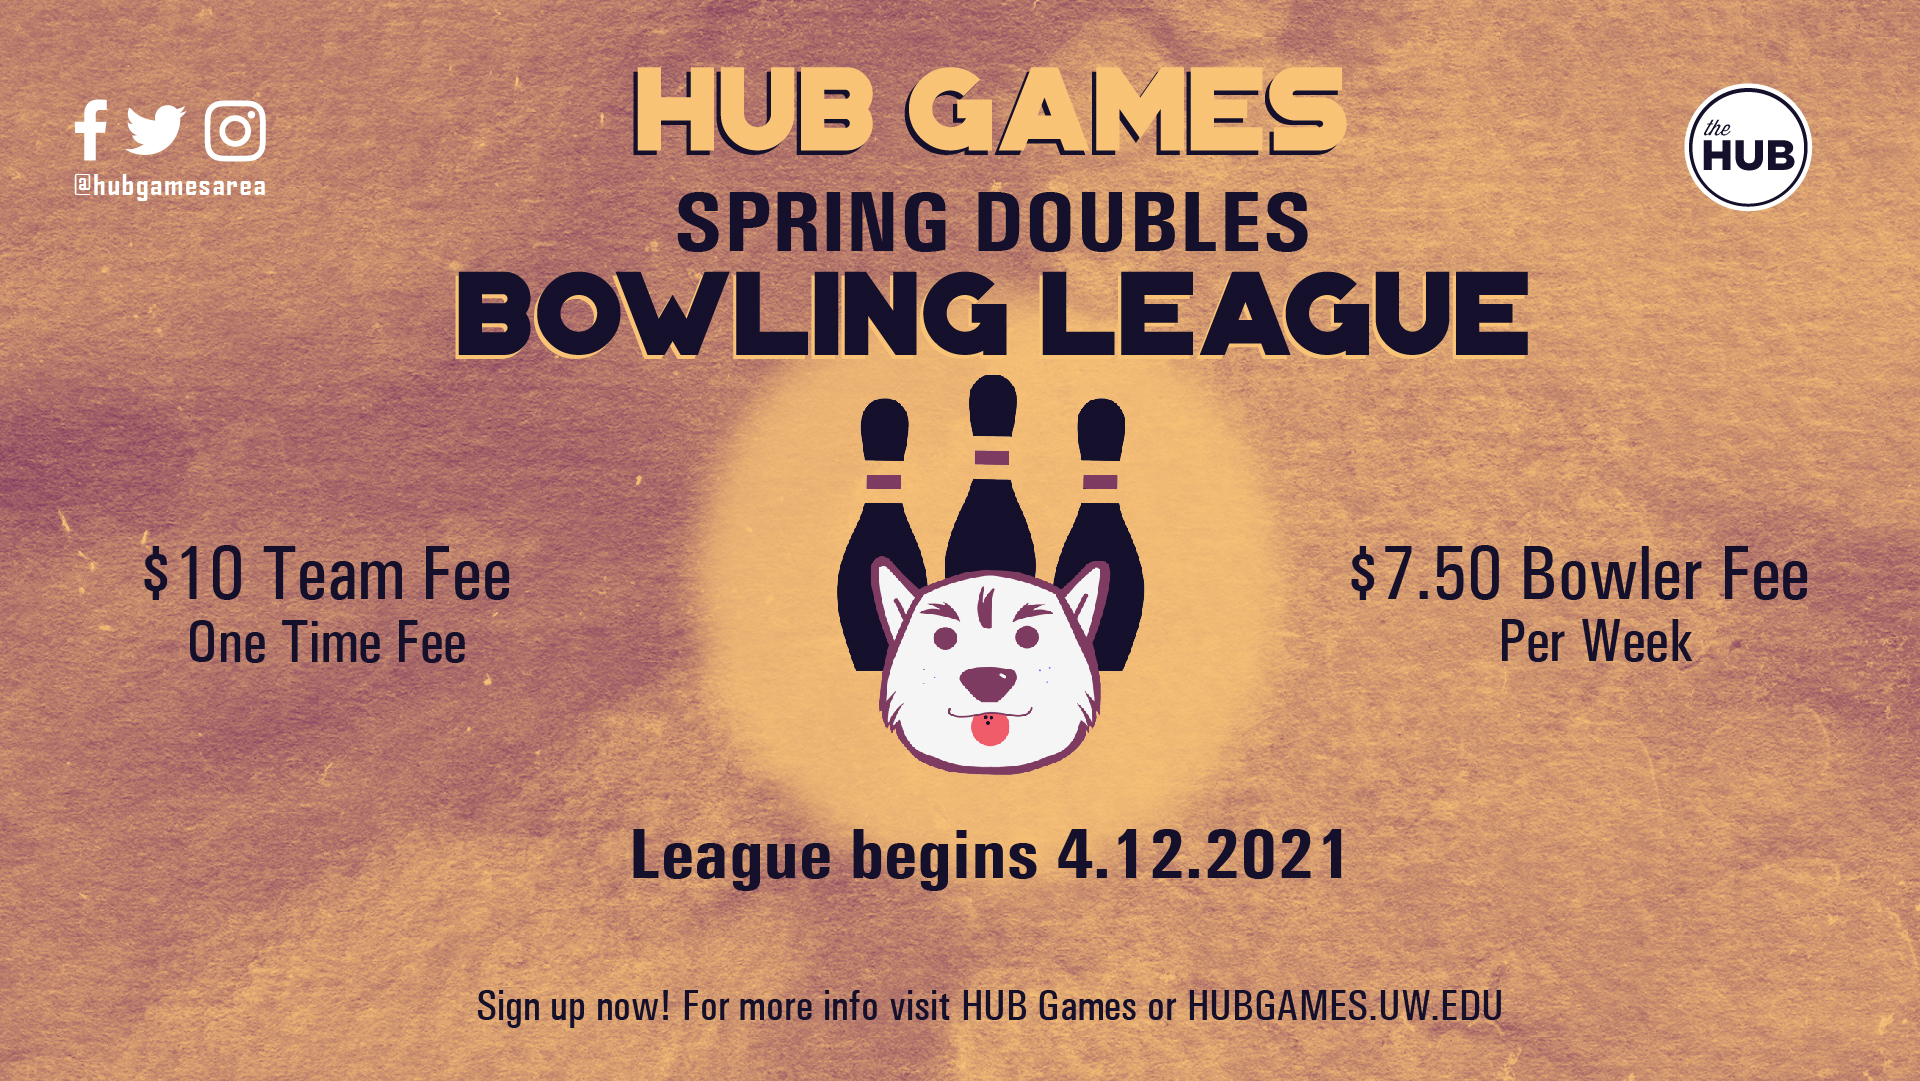 Bowling Leagues The HUB